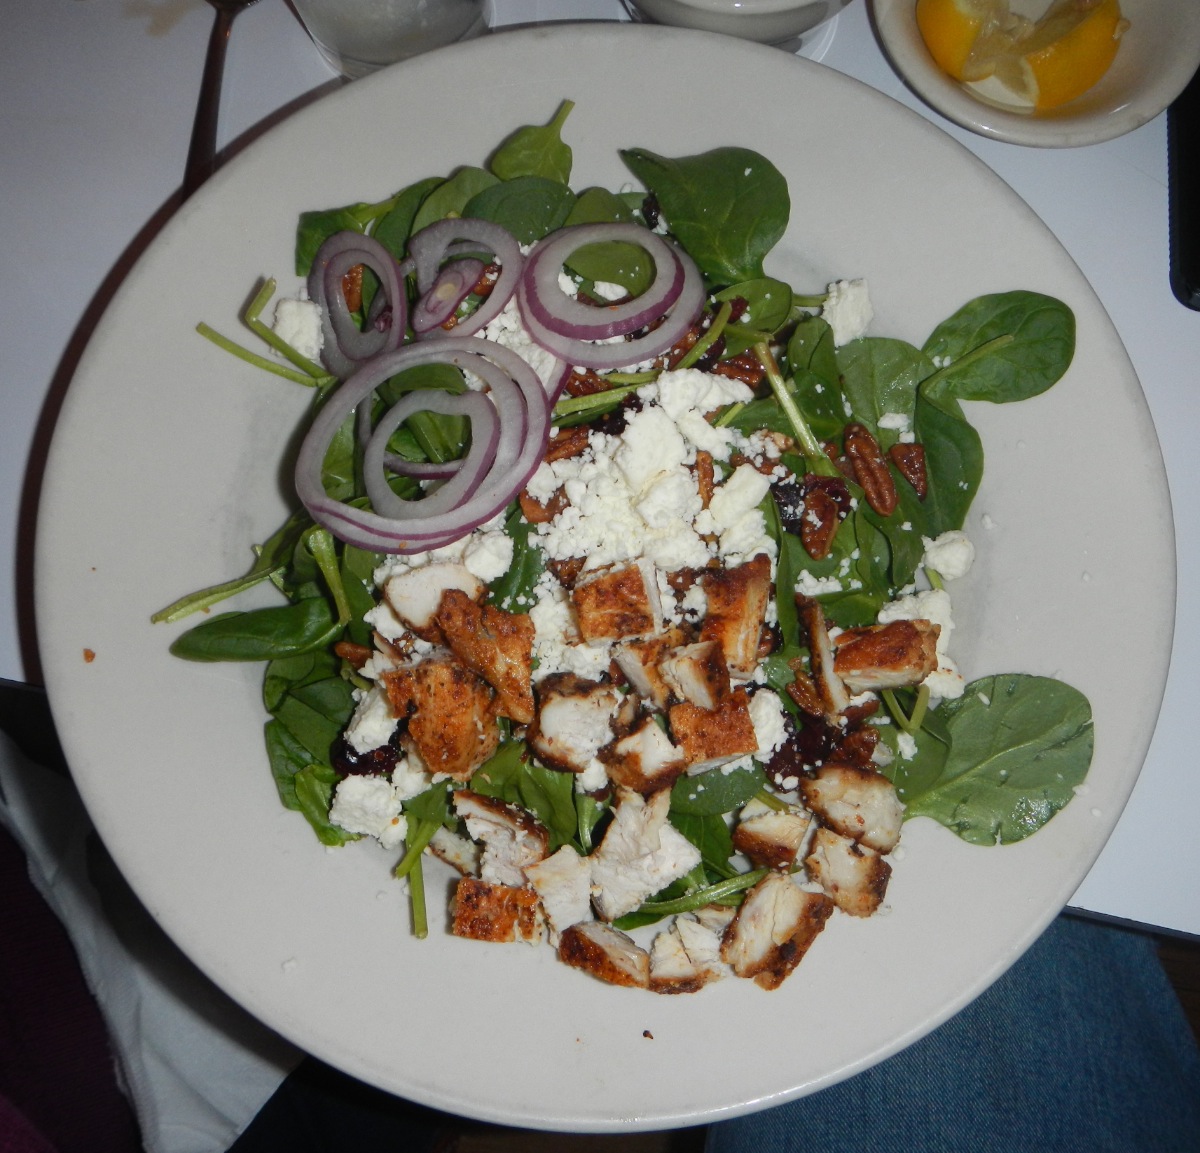 Sunset Grill - Spinach-Chicken Salad 16